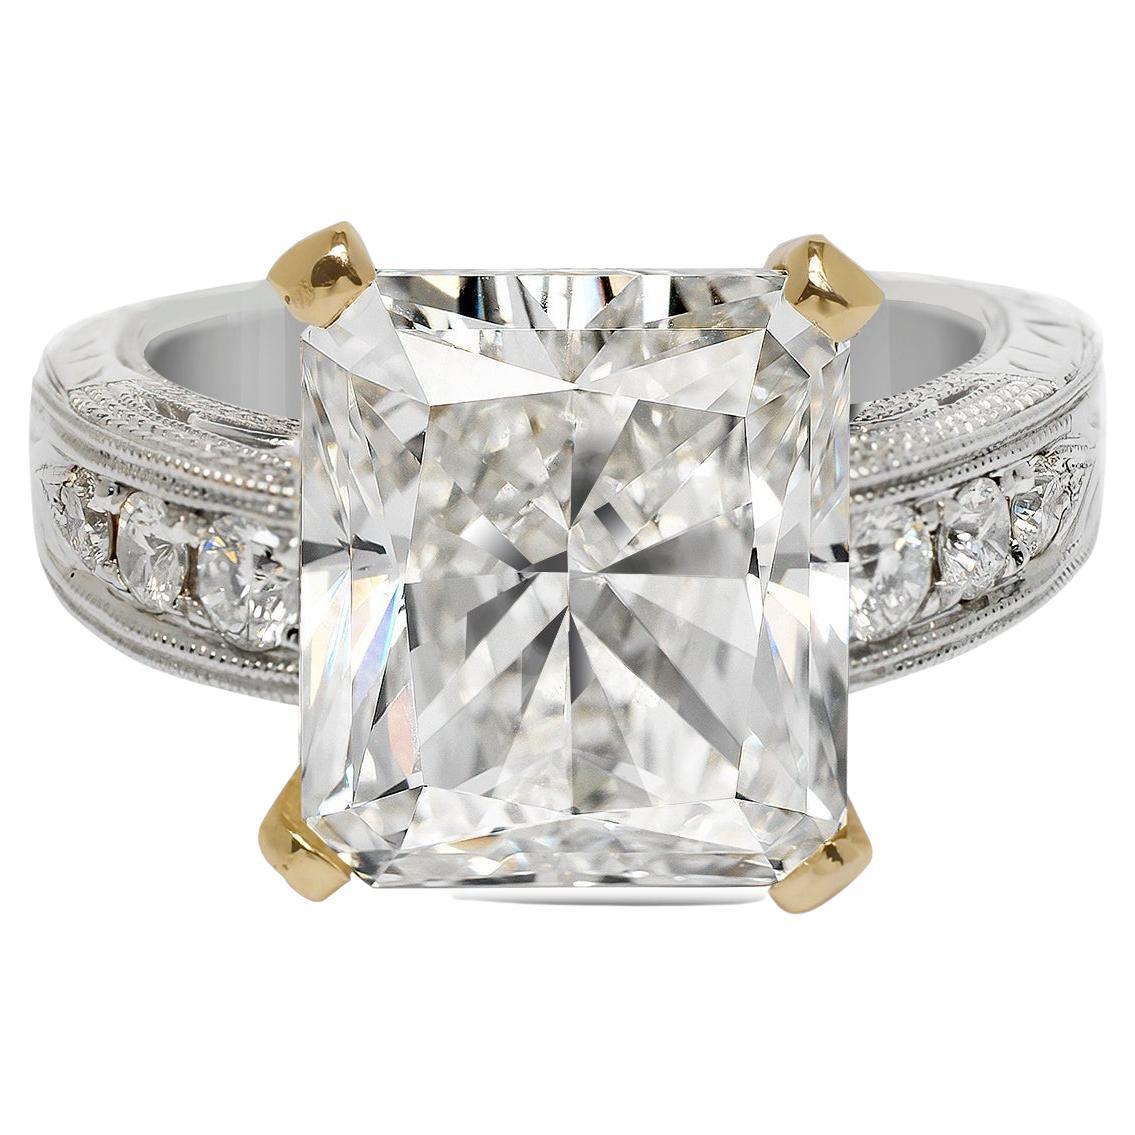 9 Carat Radiant Cut Diamond Engagement Ring Certified F VS